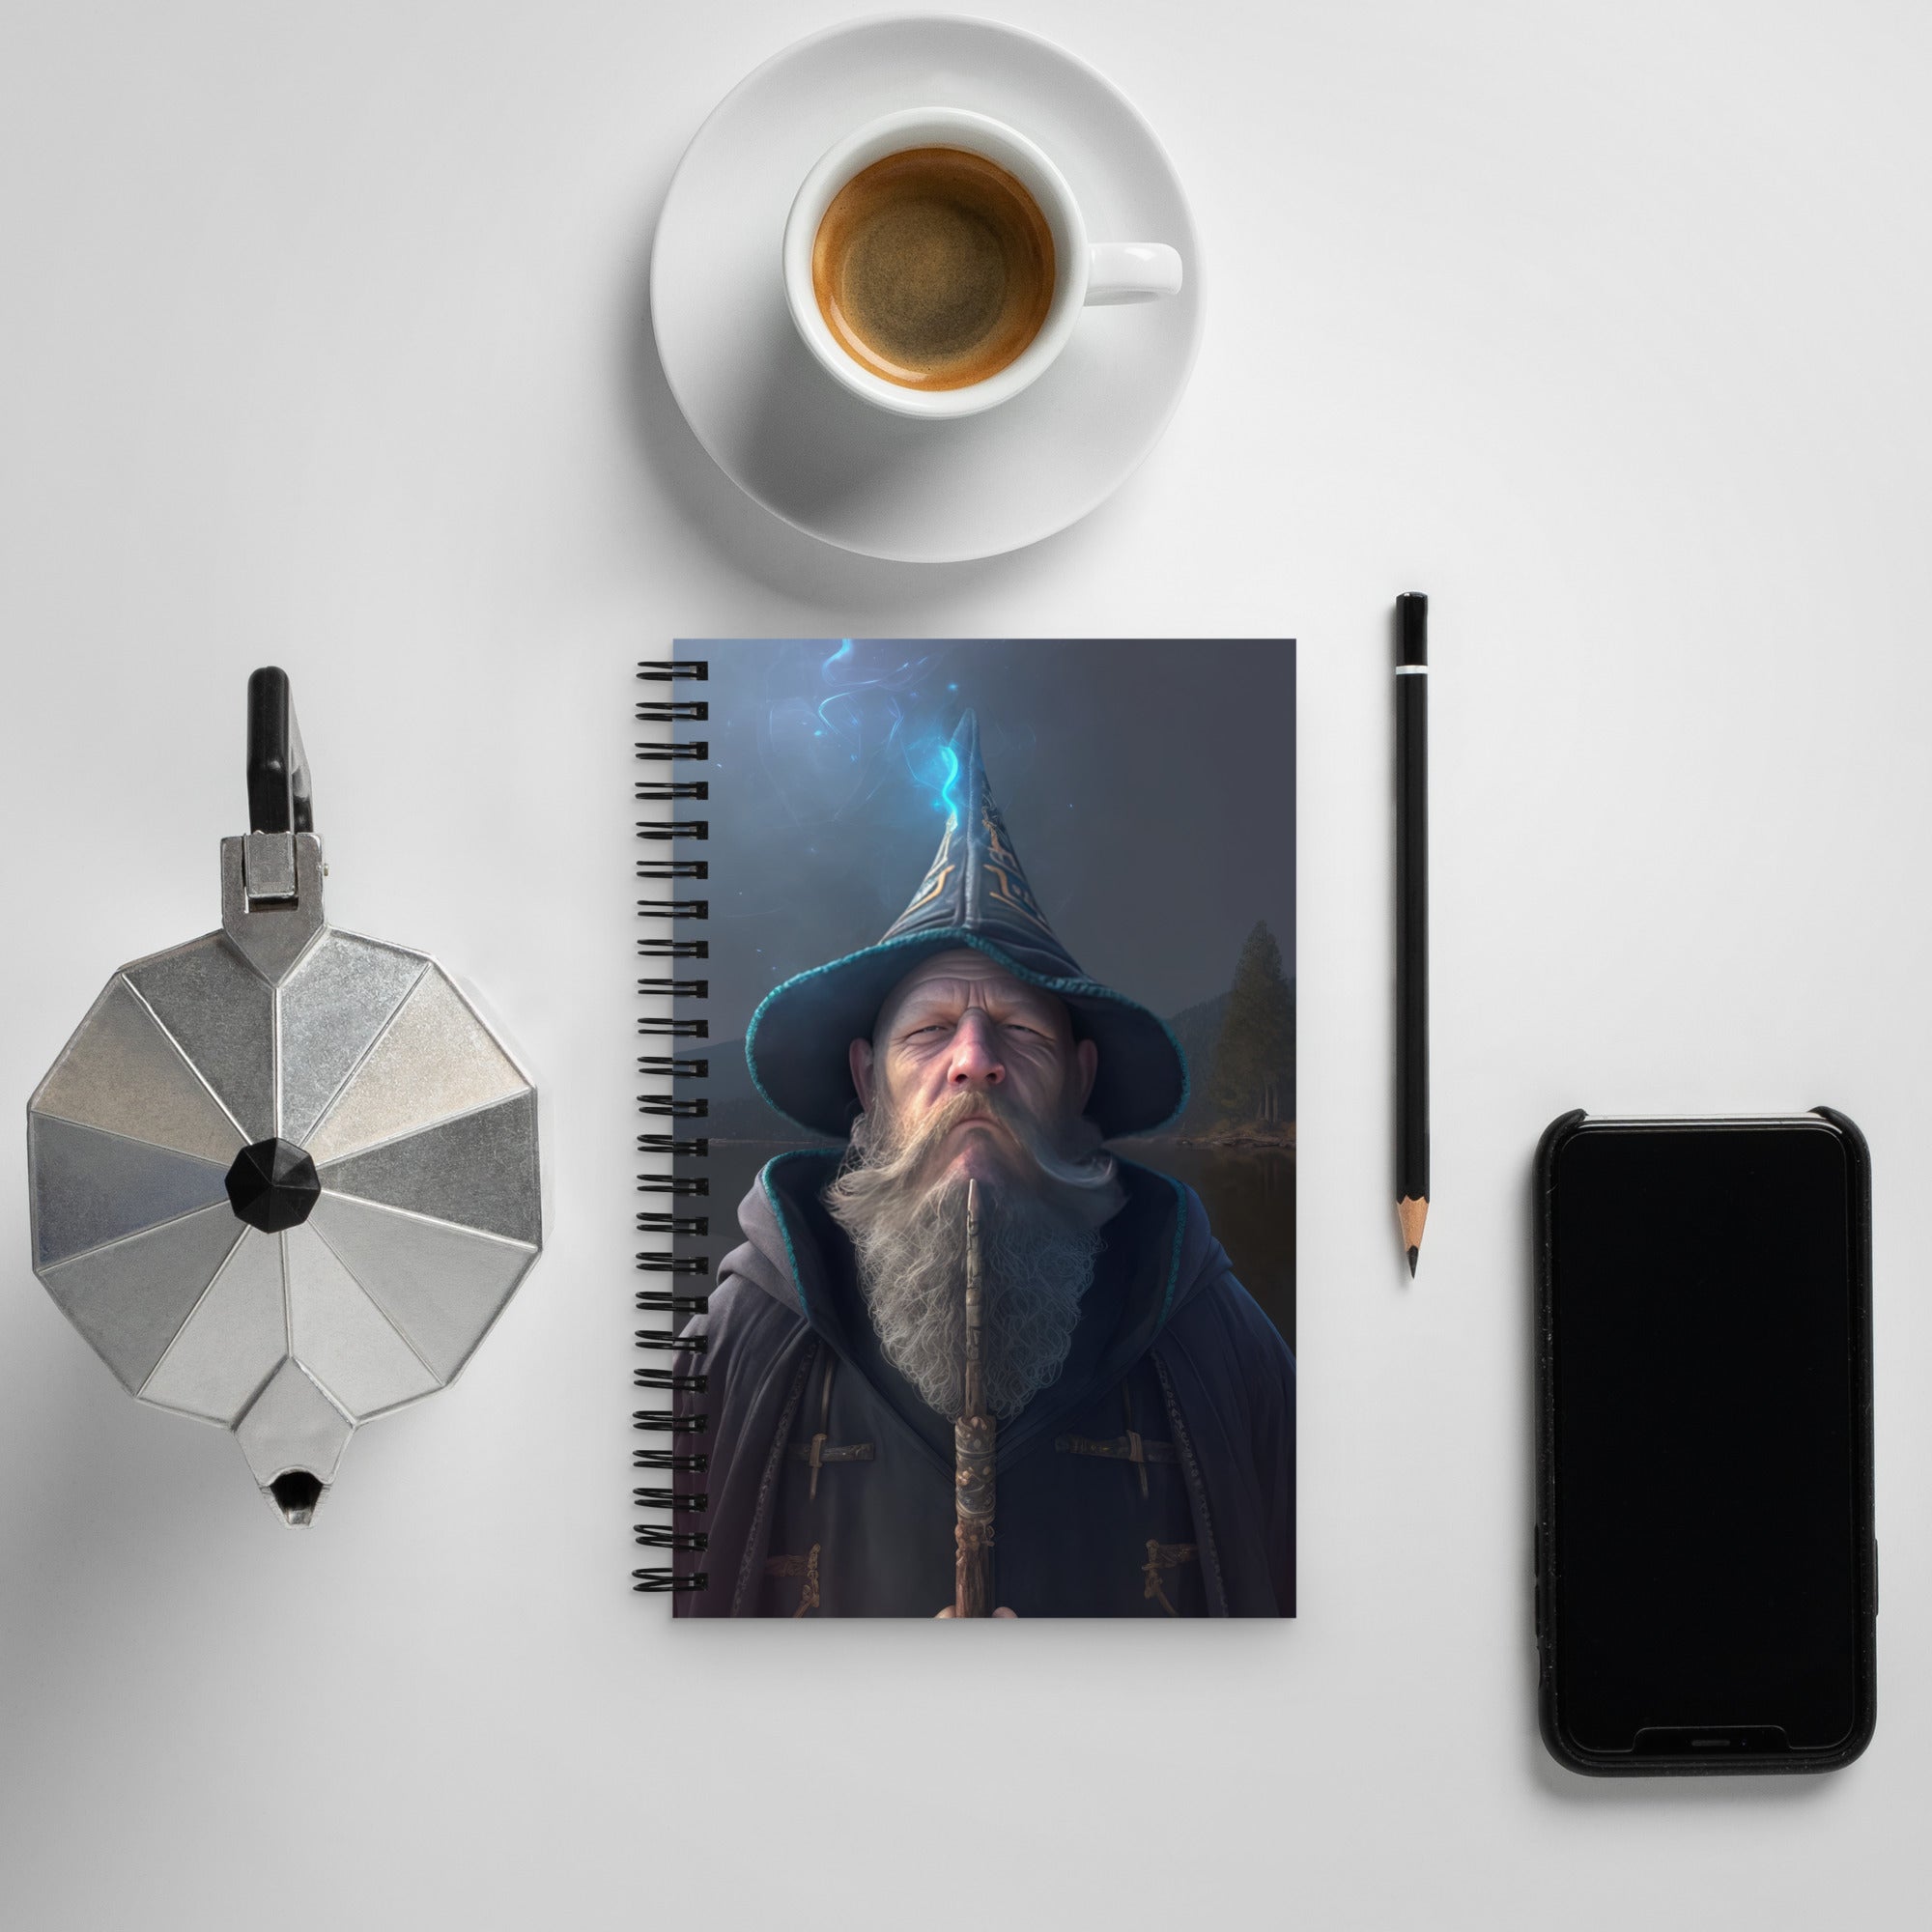 The Wizard Spiral notebook